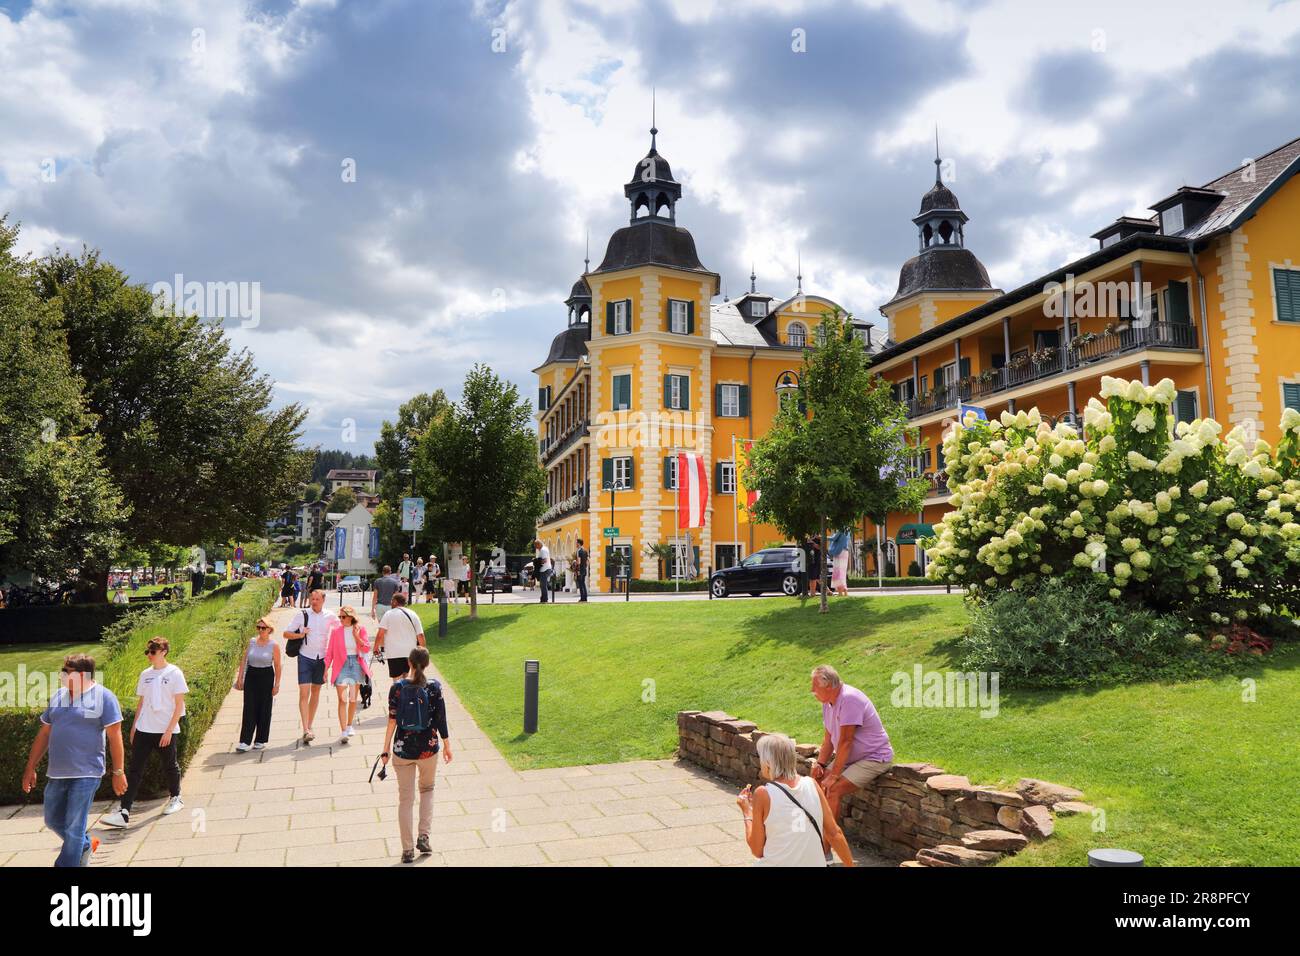 VELDEN AM WORTHER SEE, AUSTRIA - AUGUST 12, 2022: People visit Velden Am Worther See resort town in Carinthia, Austria. Stock Photo